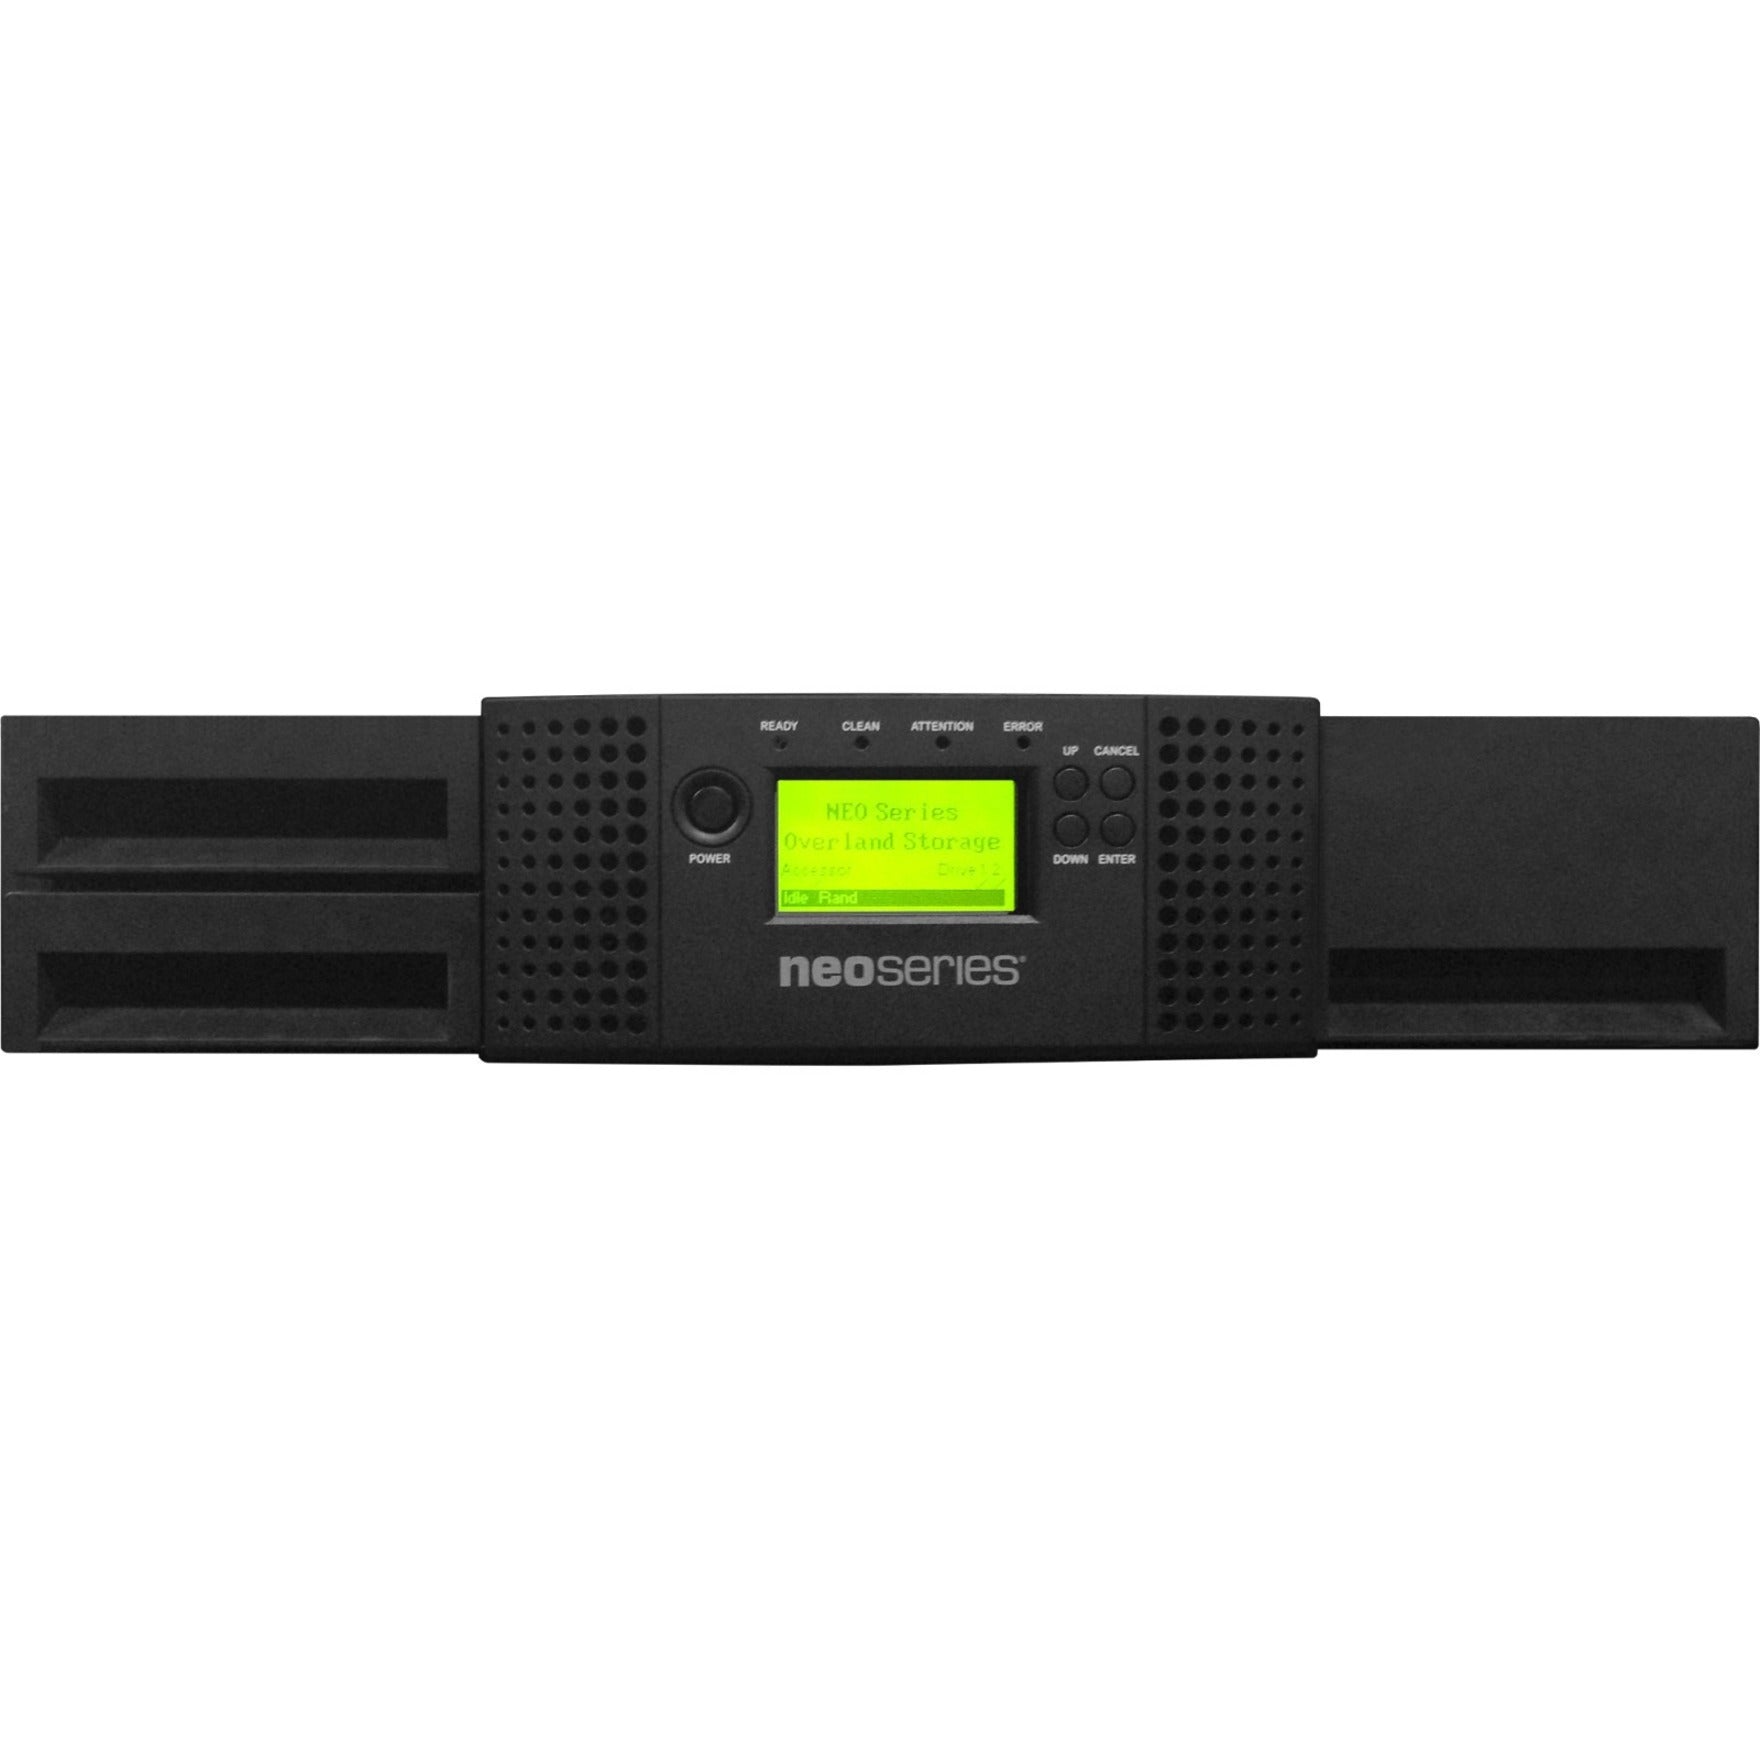 Overland OV-NEOST247FC NEOs T24 Tape Autoloader, LTO-7, 144 TB Native Storage Capacity, 24 Cartridge Slots